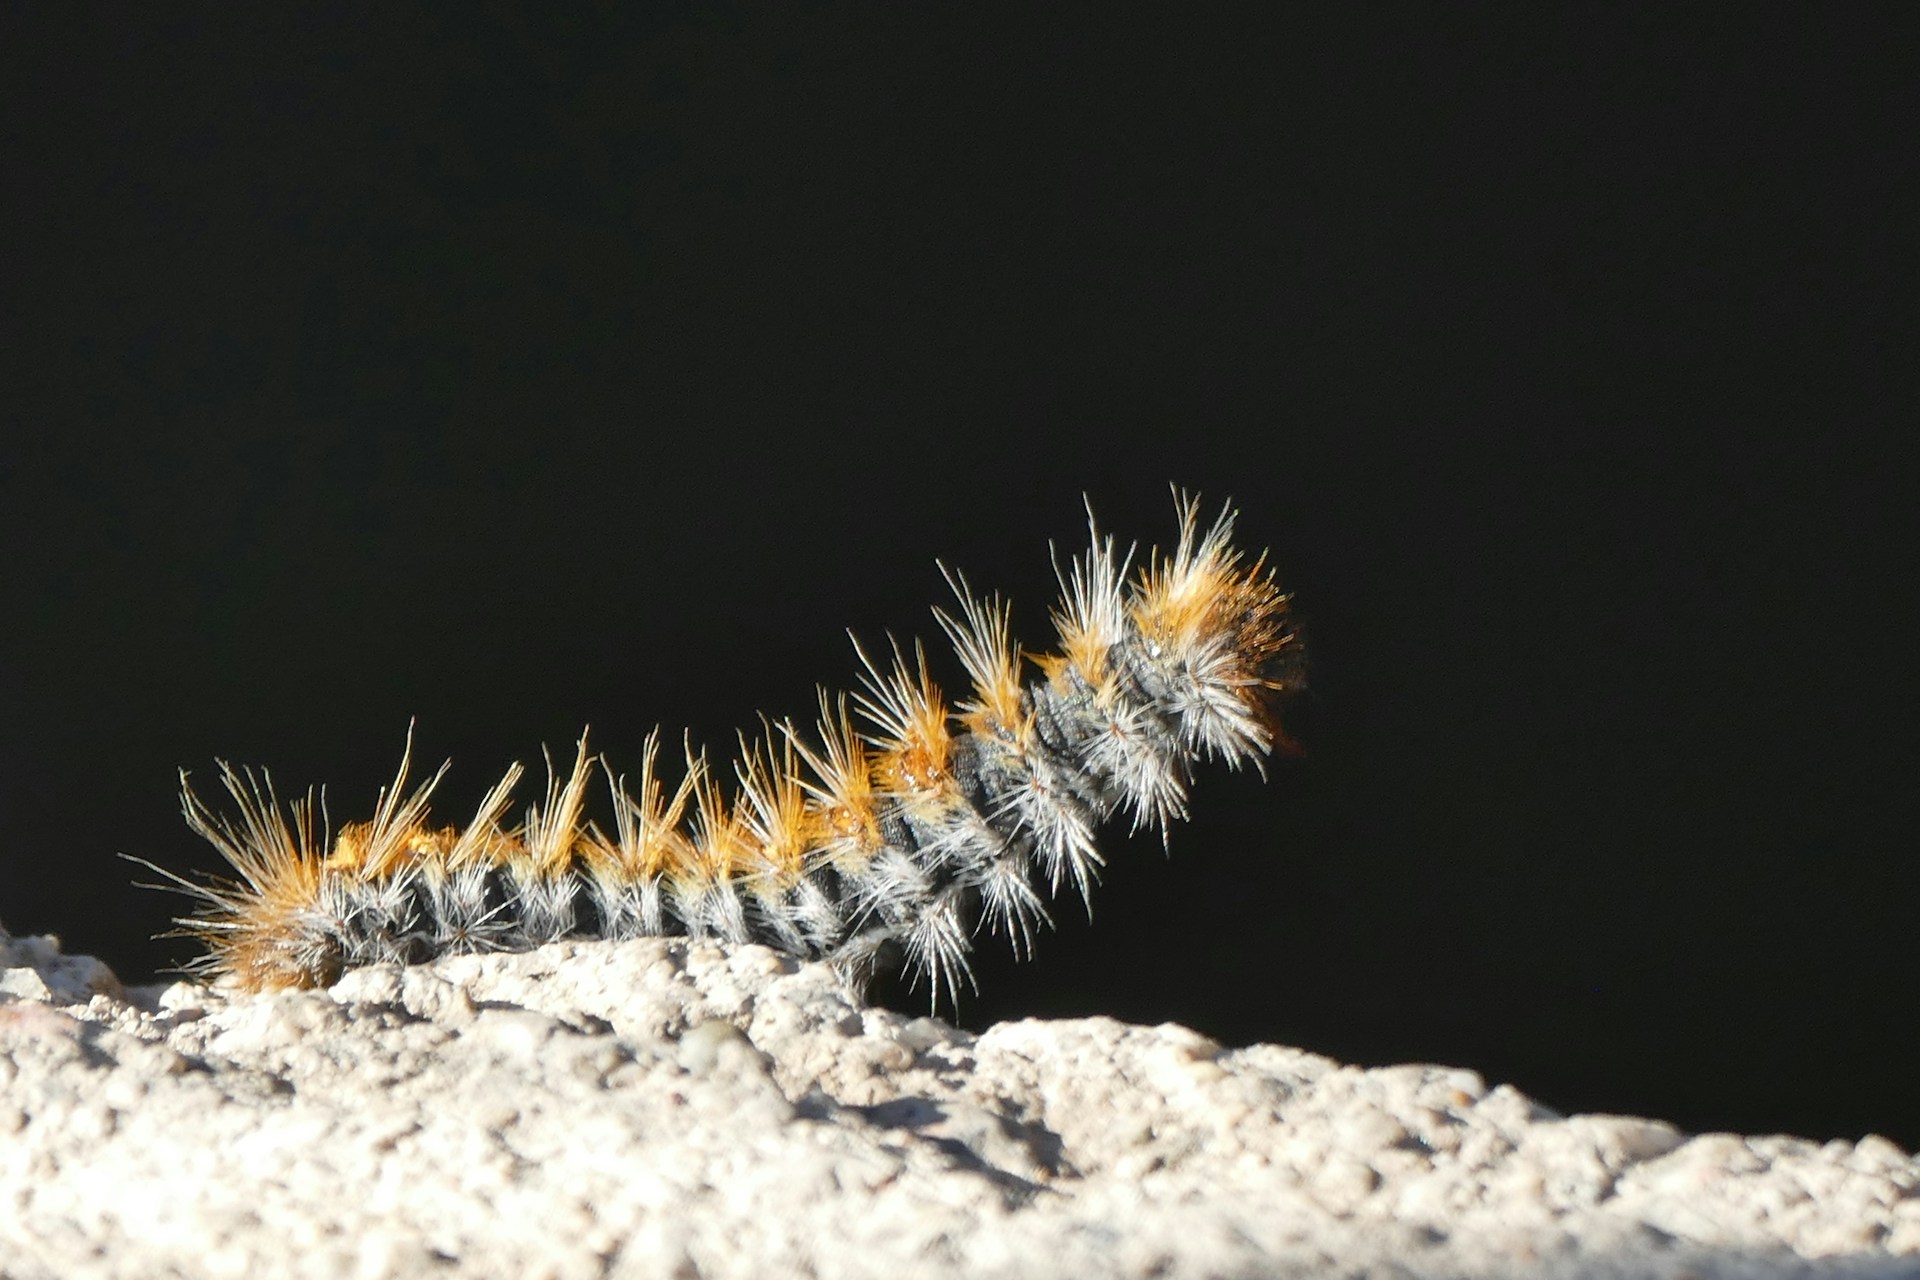 a close up of a caterpillar on a rock